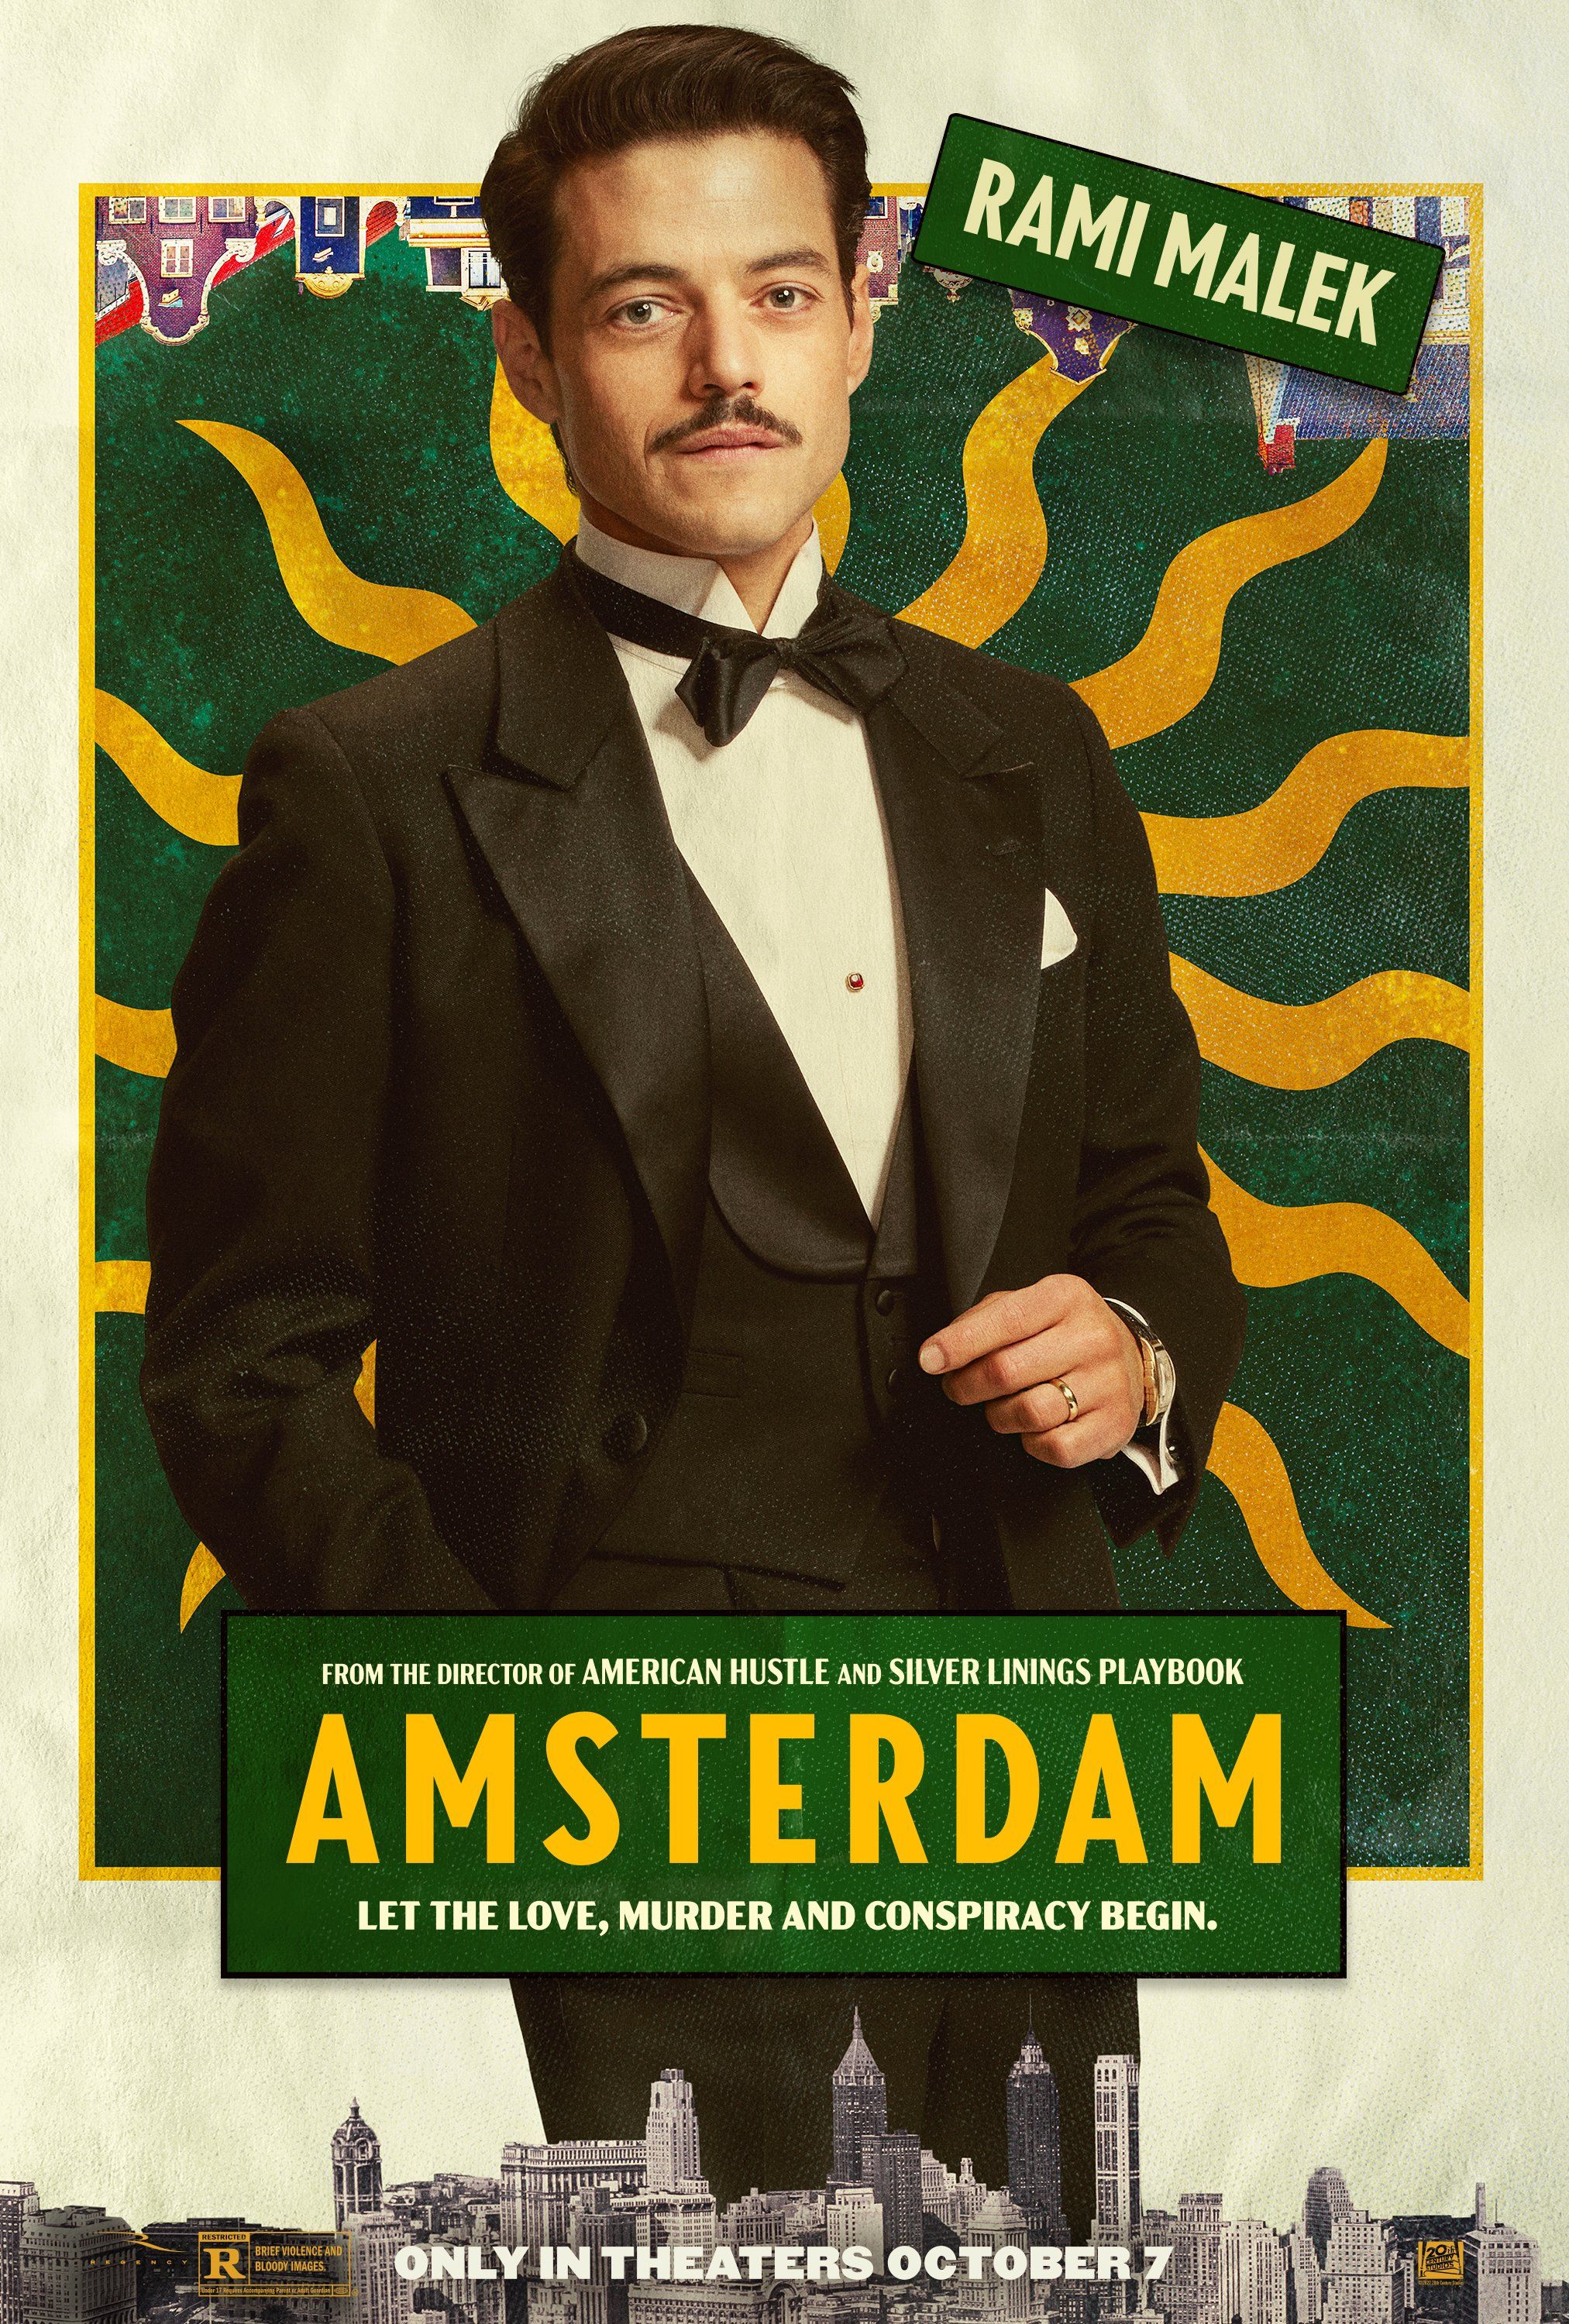 Rami Malek in Amsterdam poster